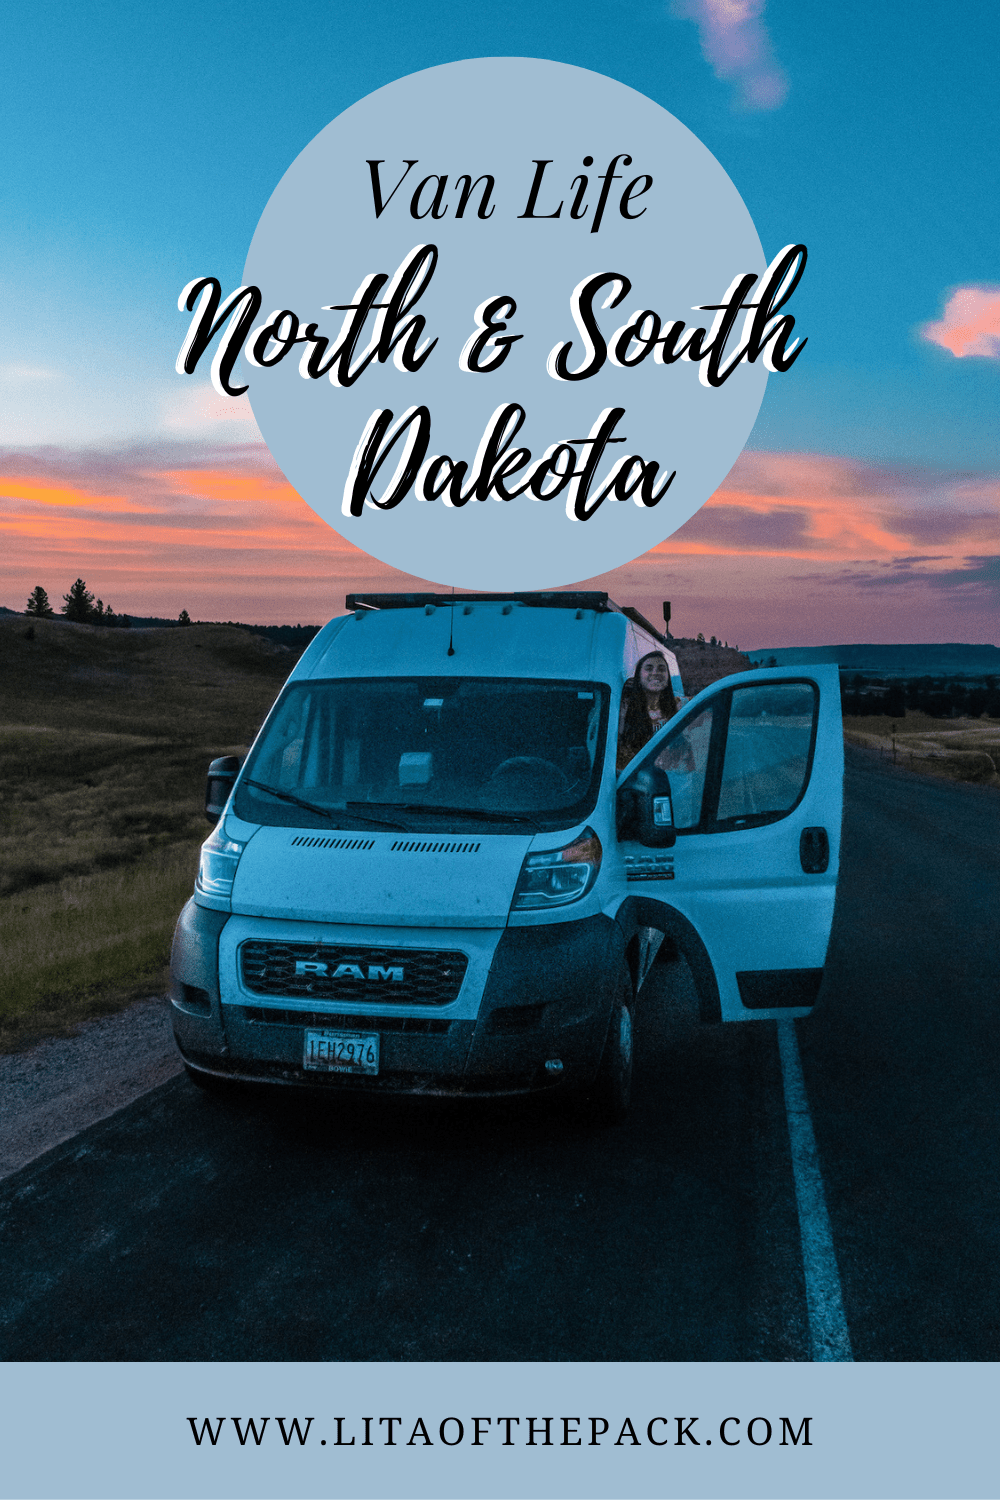 van life south & north dakota